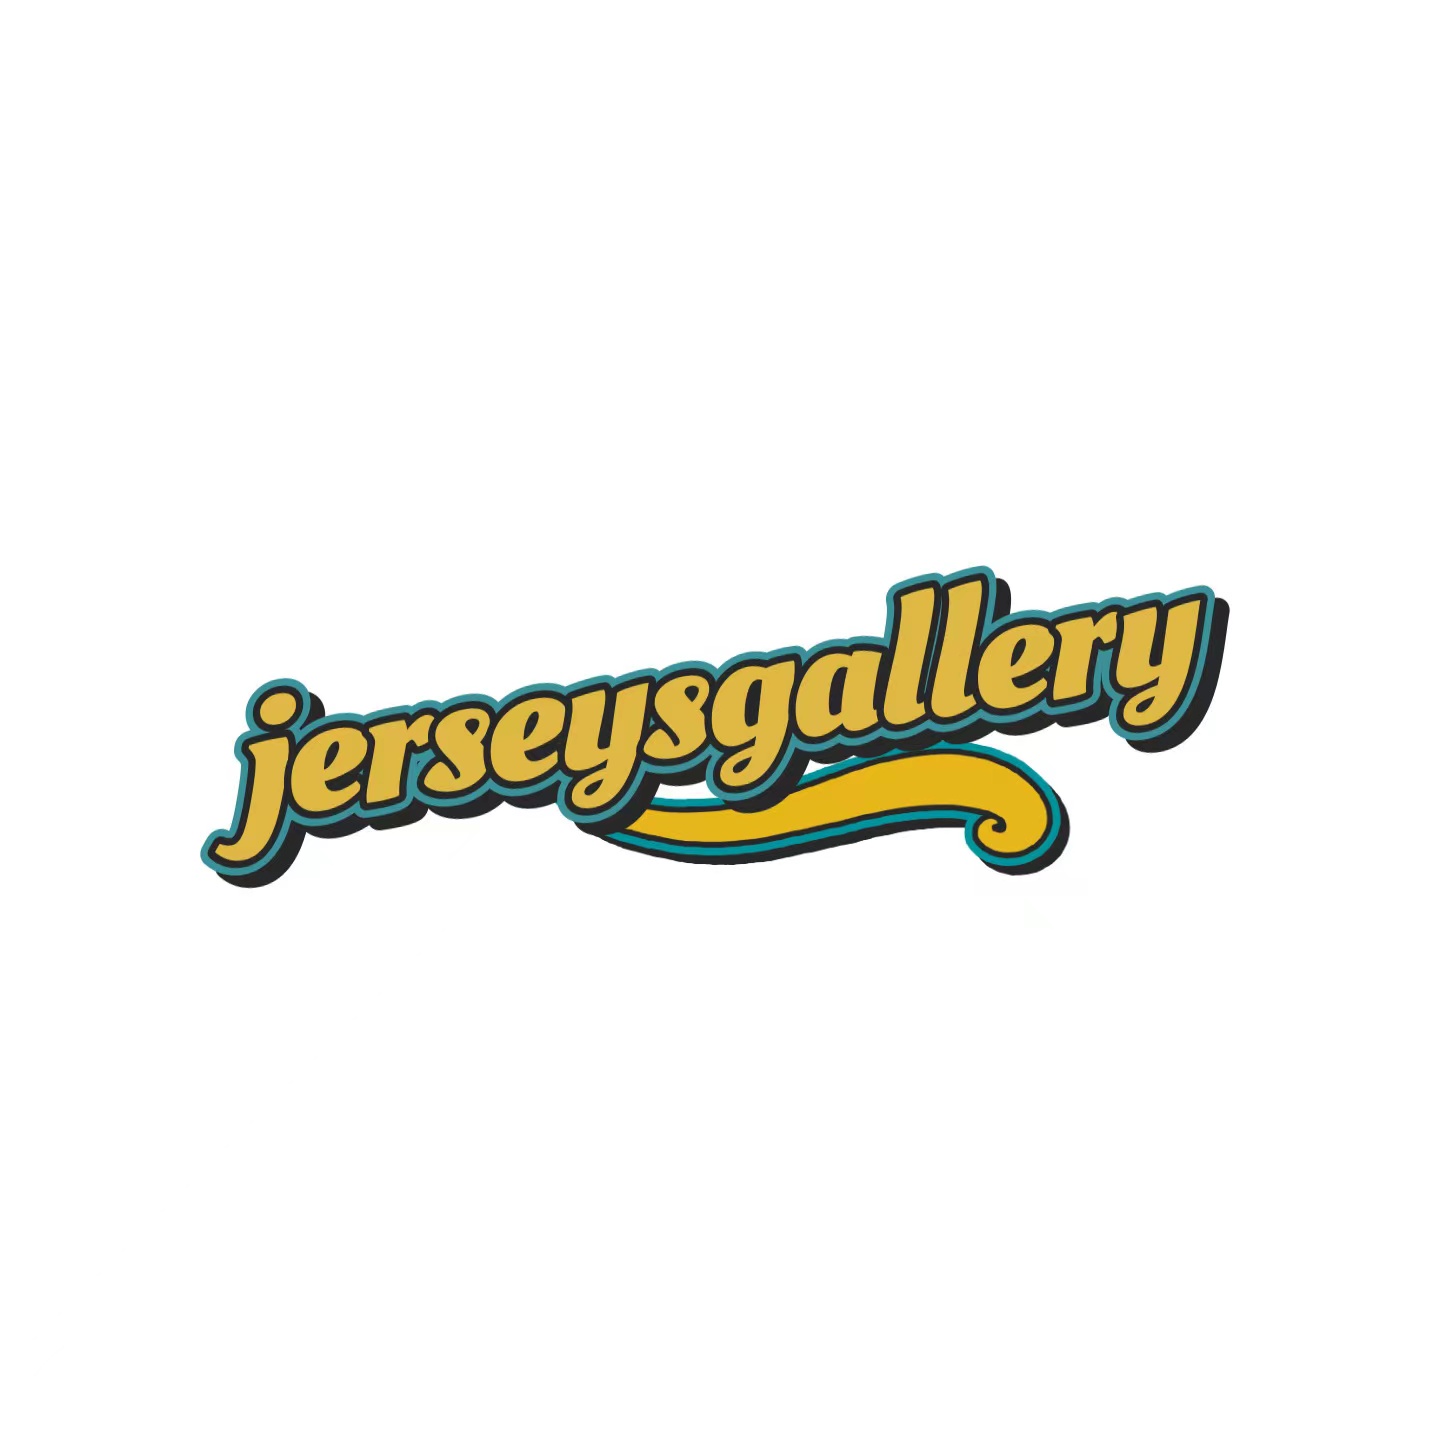 jerseys gallery